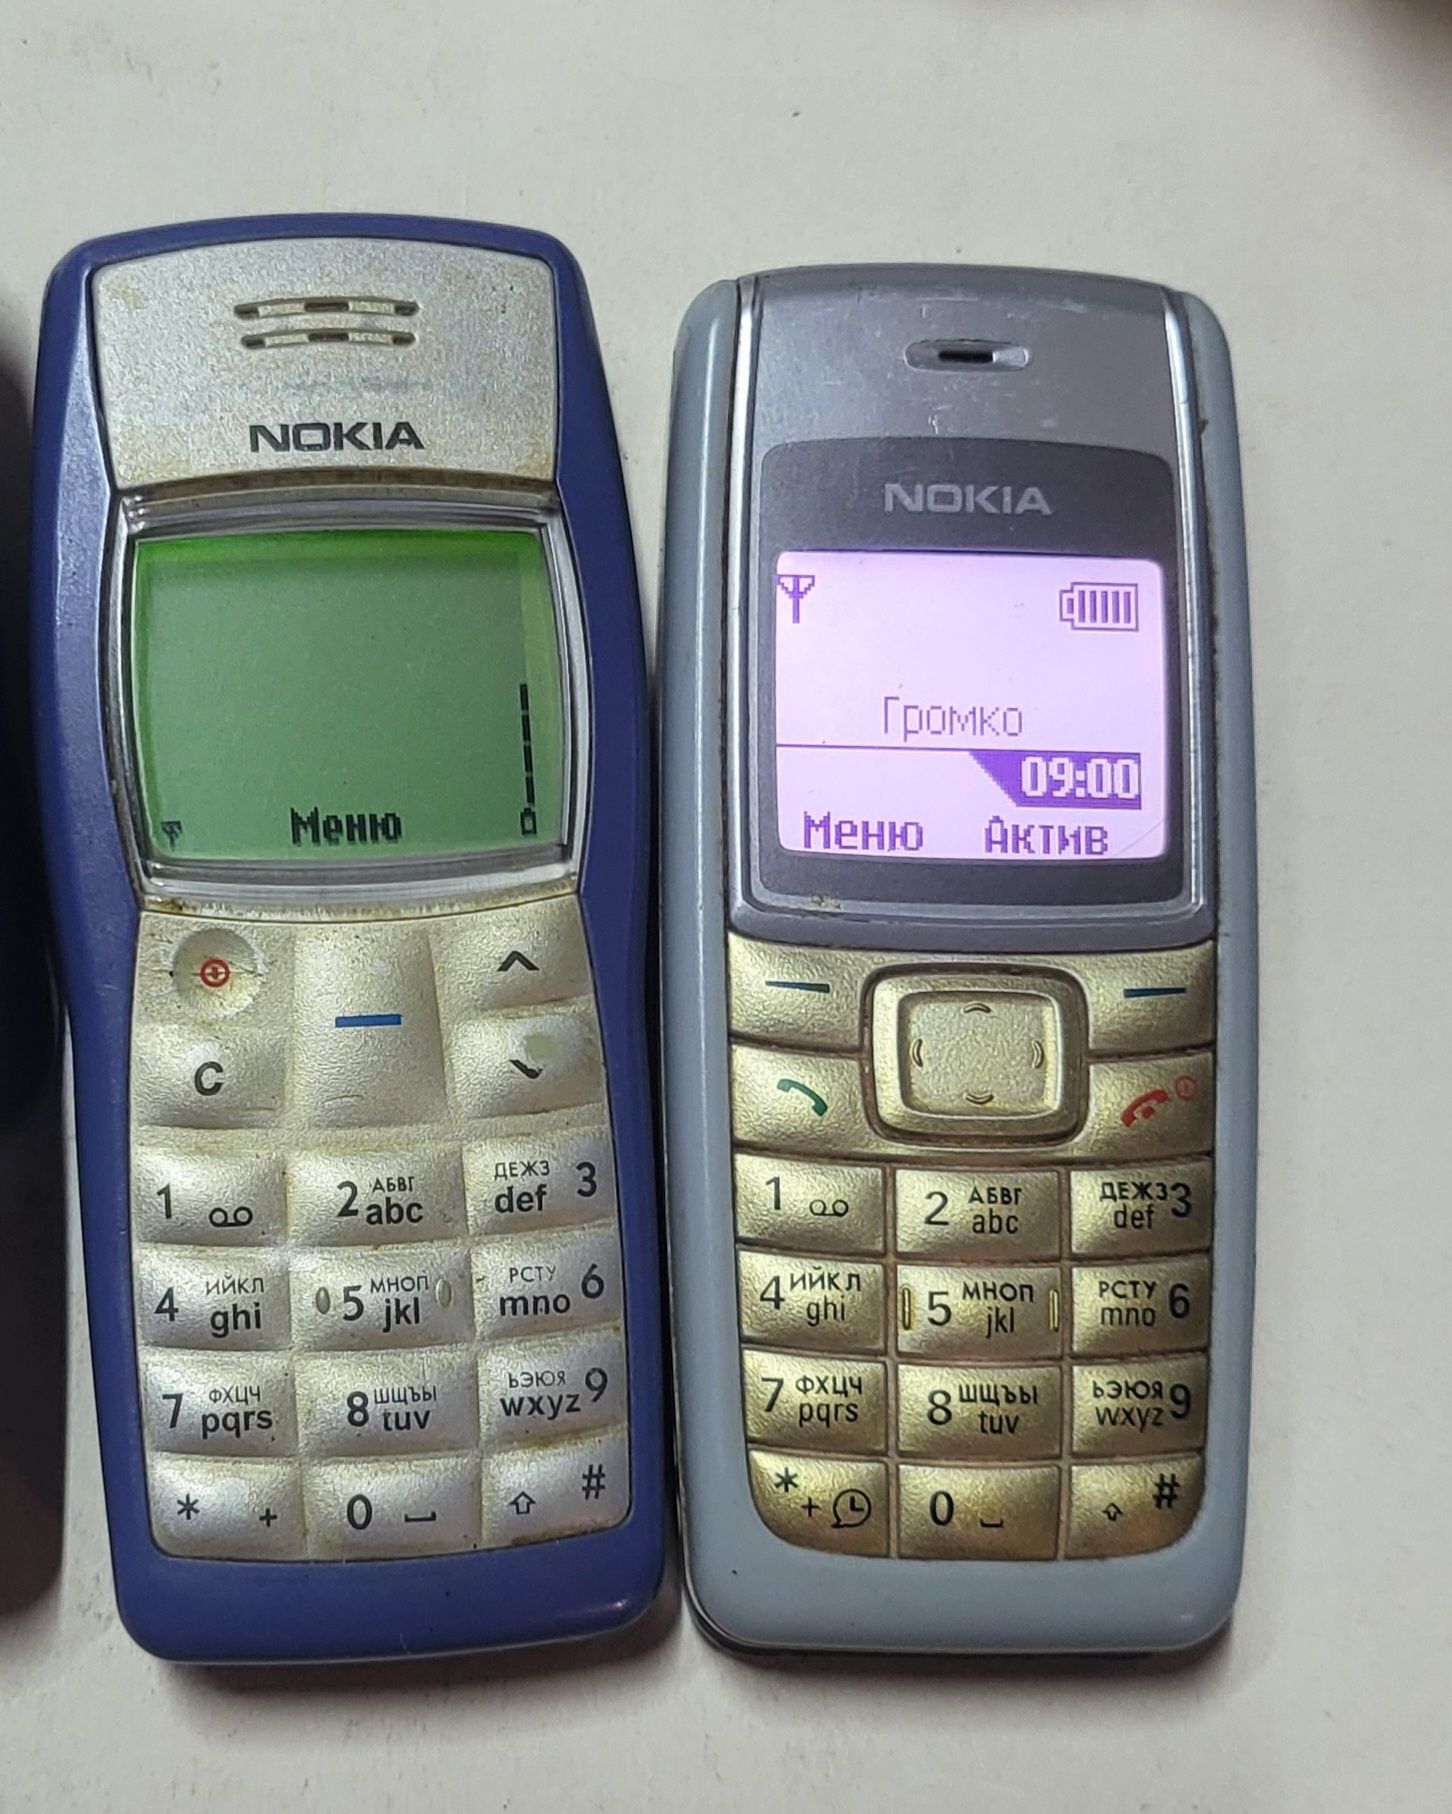 Телефон Nokia 1100 cзарядкой и батареей цена за 1 sharp